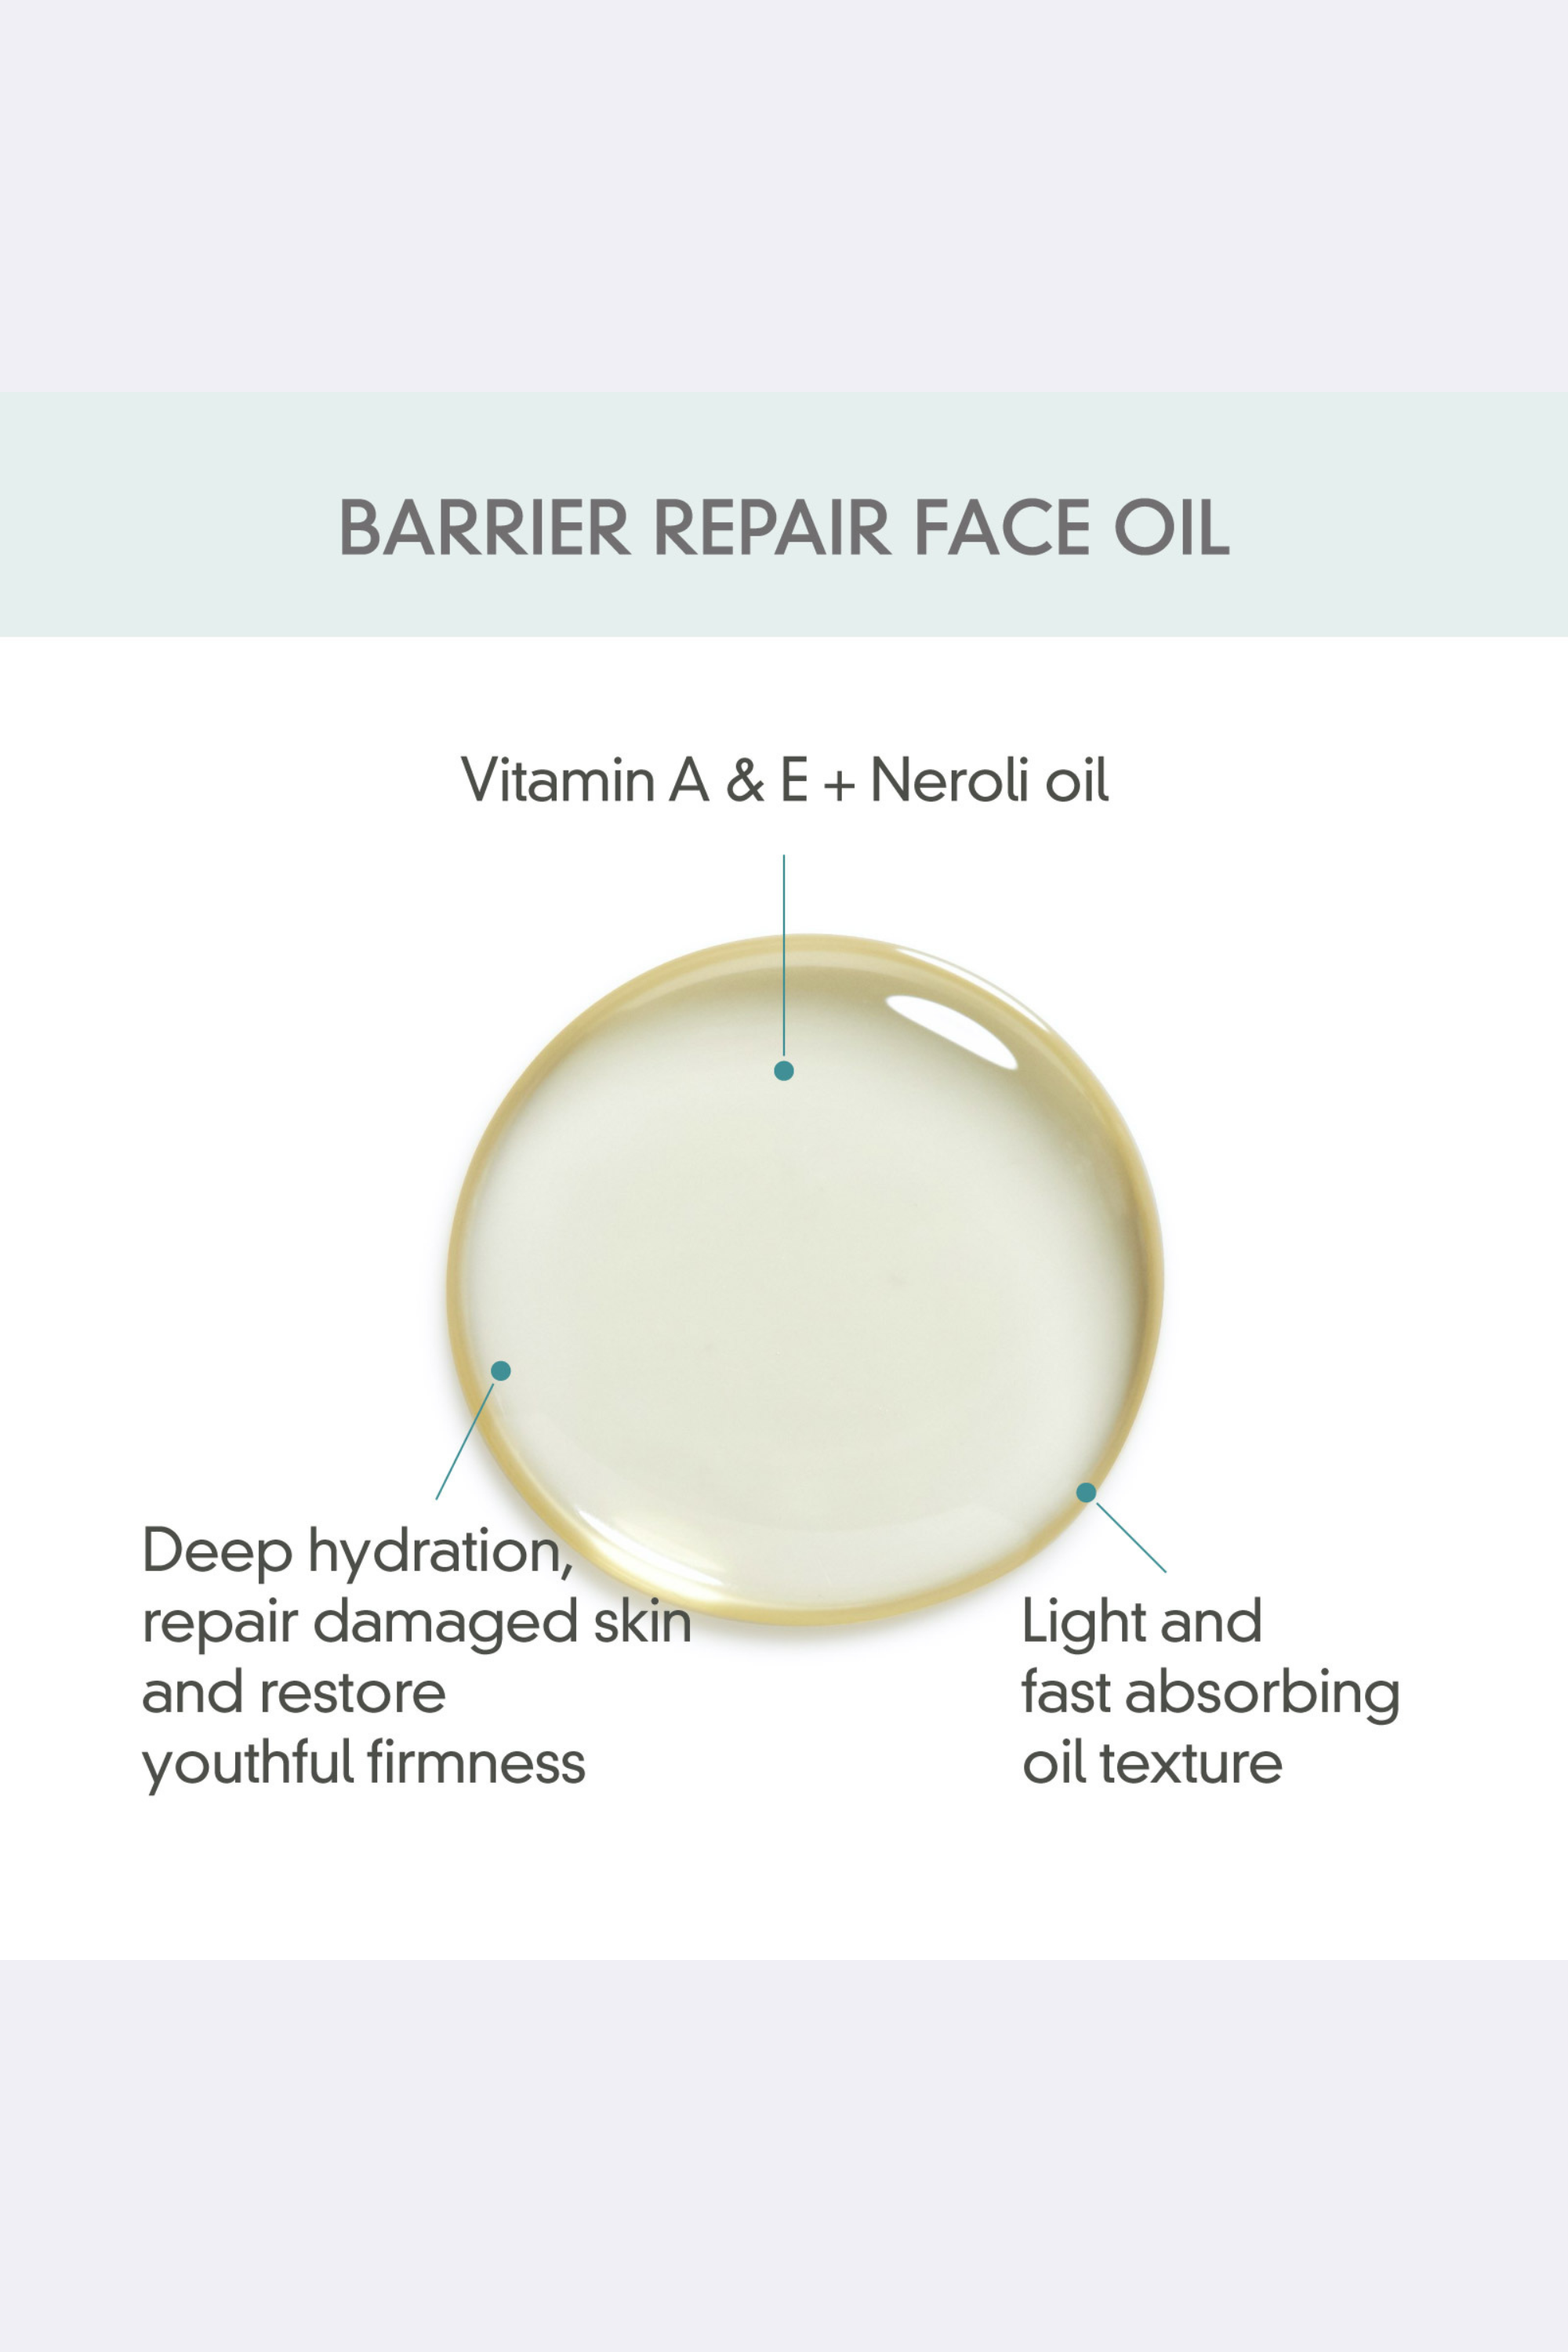 Barrier Repair Facial Set ($66 Value) - Rovectin Skin Essentials